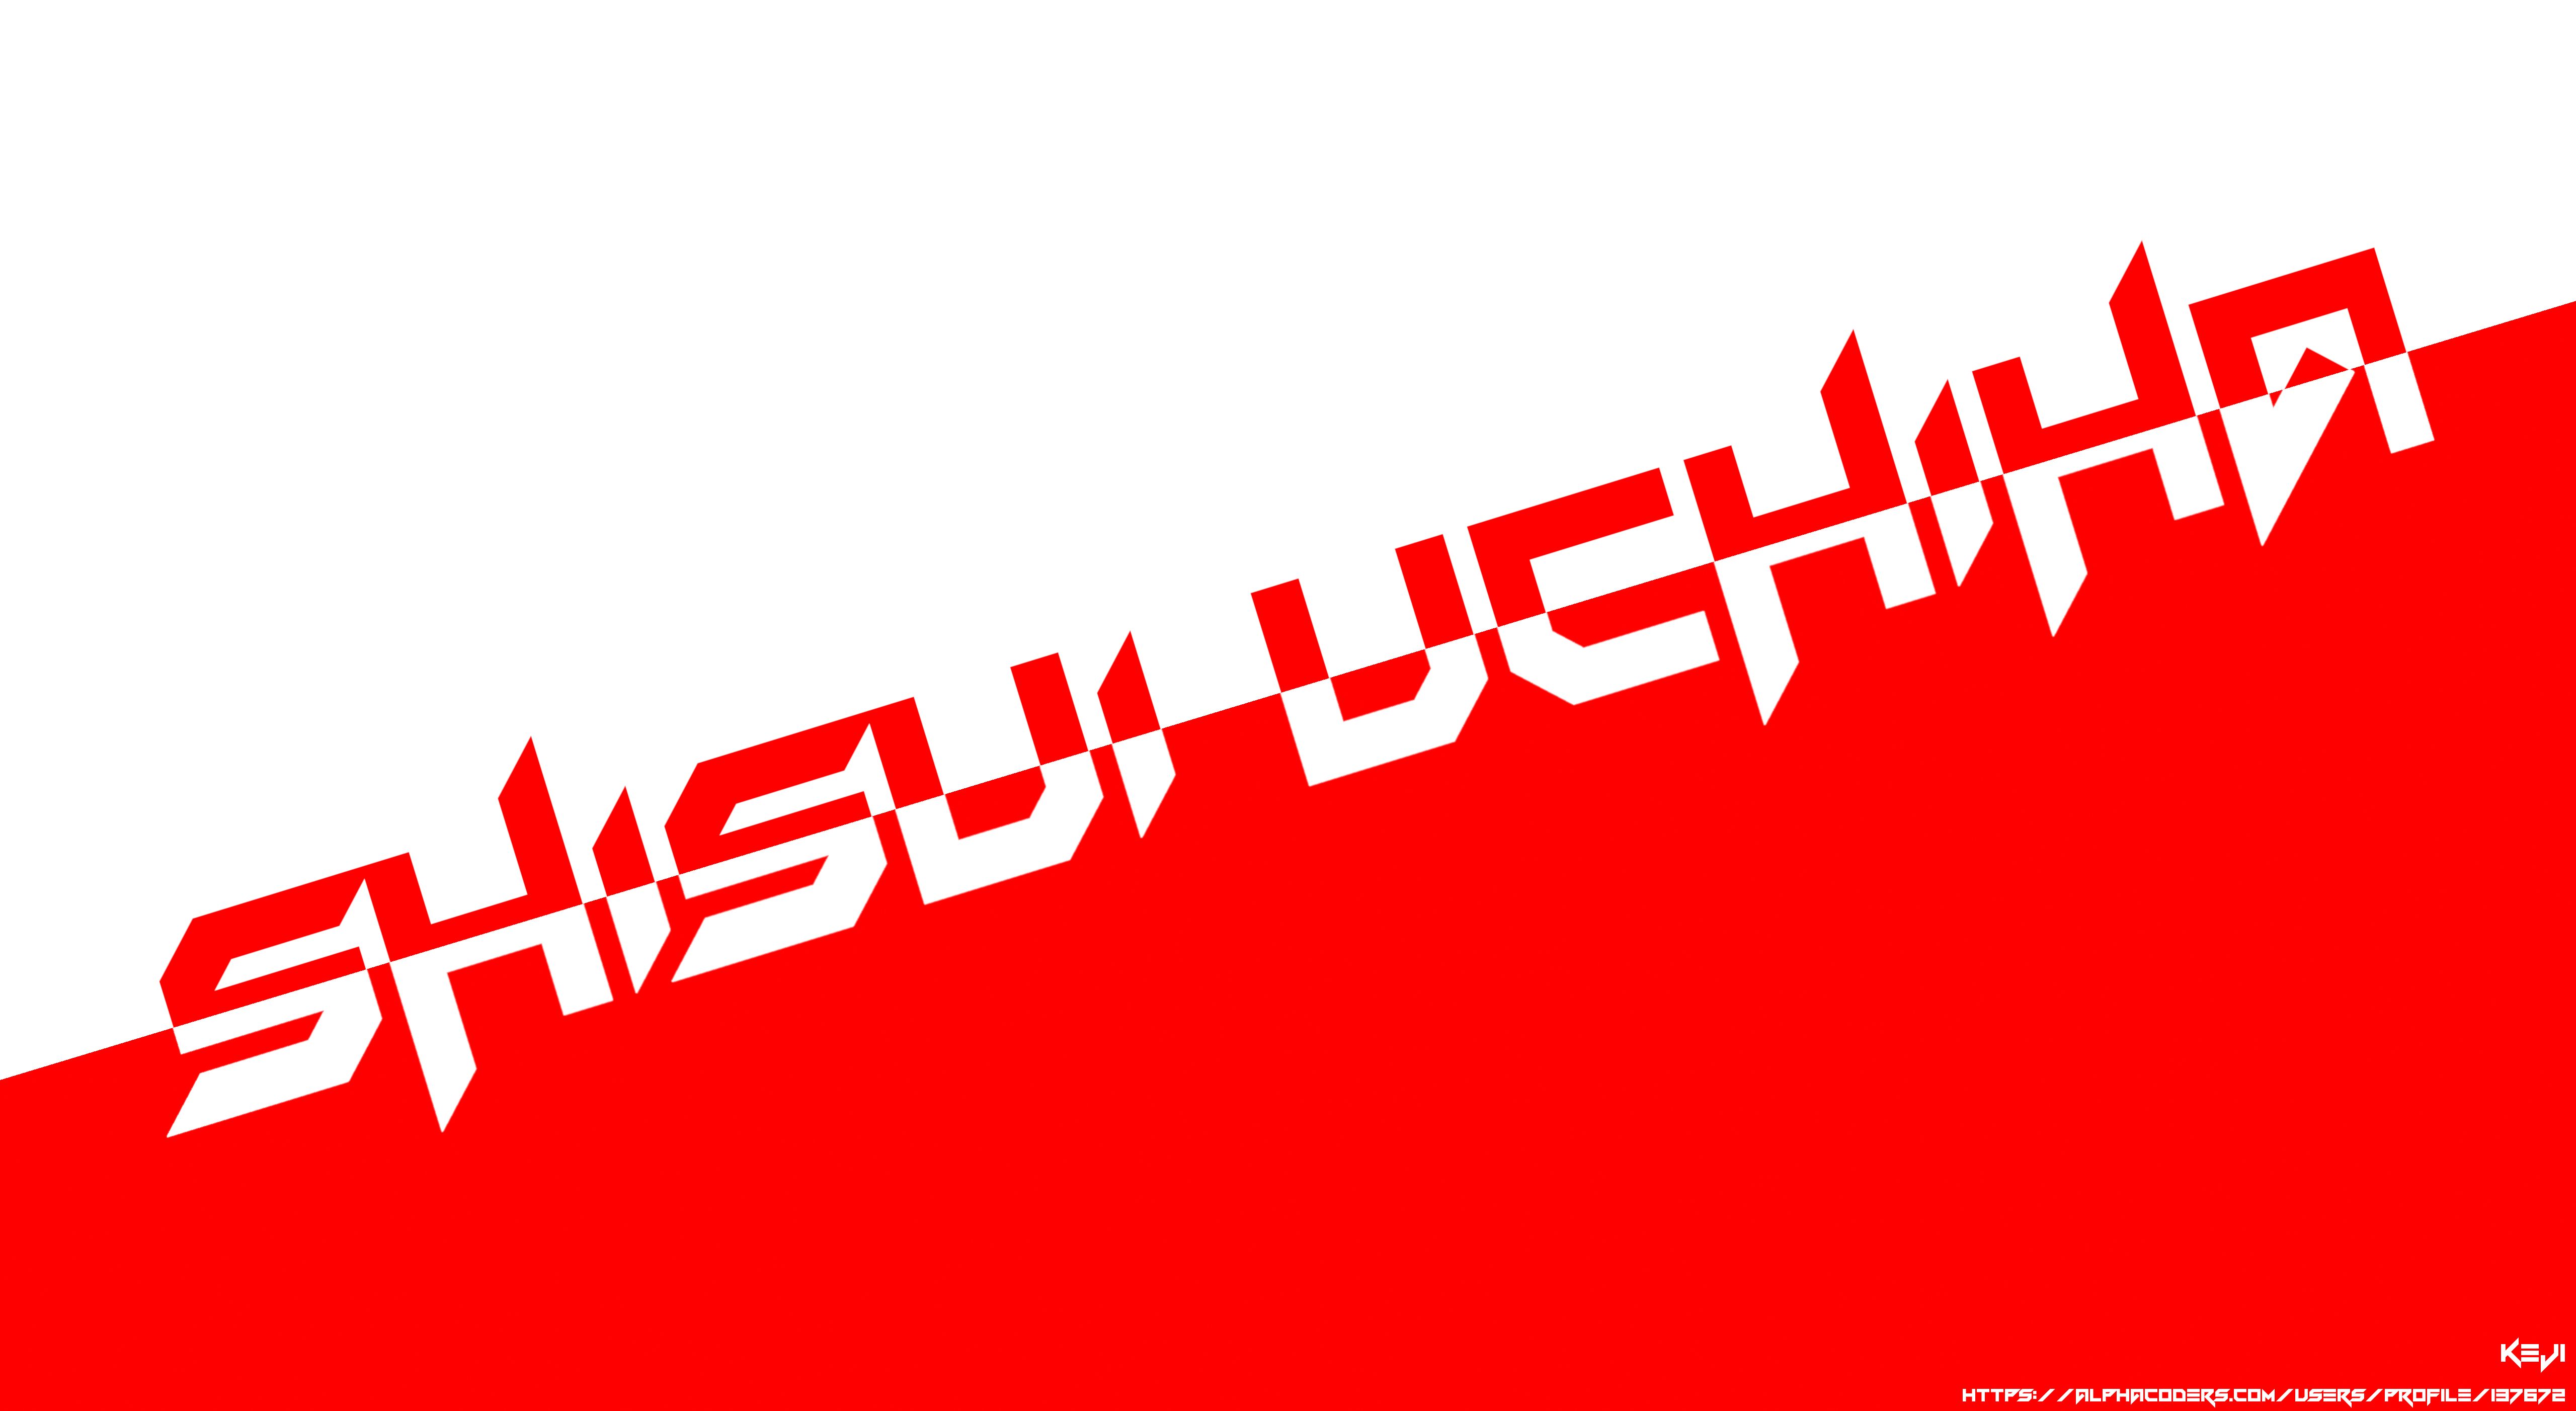 Uchiha Shisui - NARUTO - Image by Bandai Namco Entertainment #3429051 -  Zerochan Anime Image Board